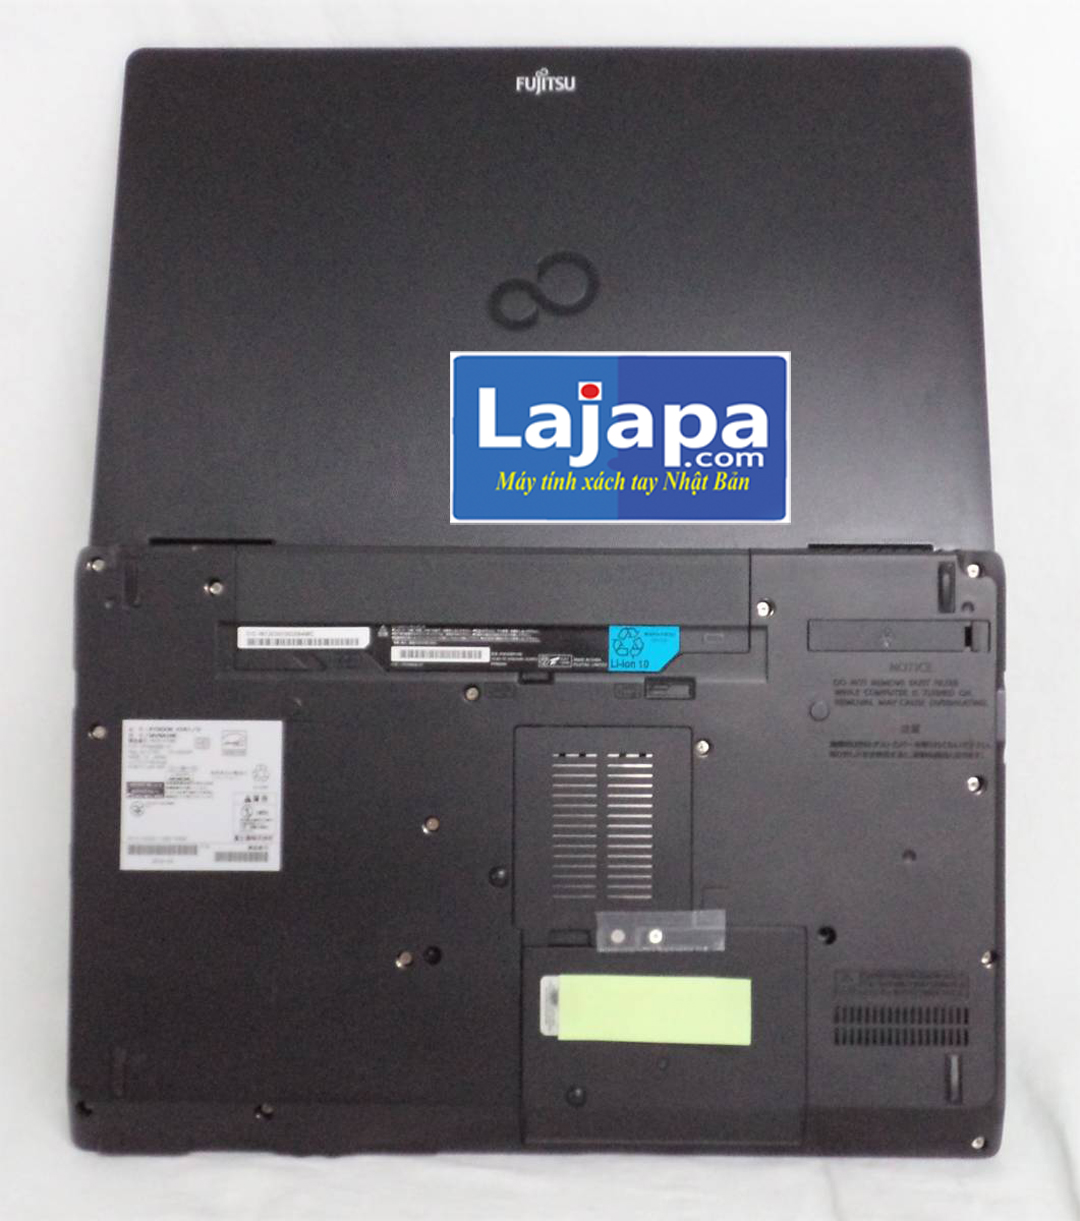 Fujitsu LIFEBOOK S762 133 inch Laptop Nhật Bản LAJAPA Laptop giá rẻ máy tính xách